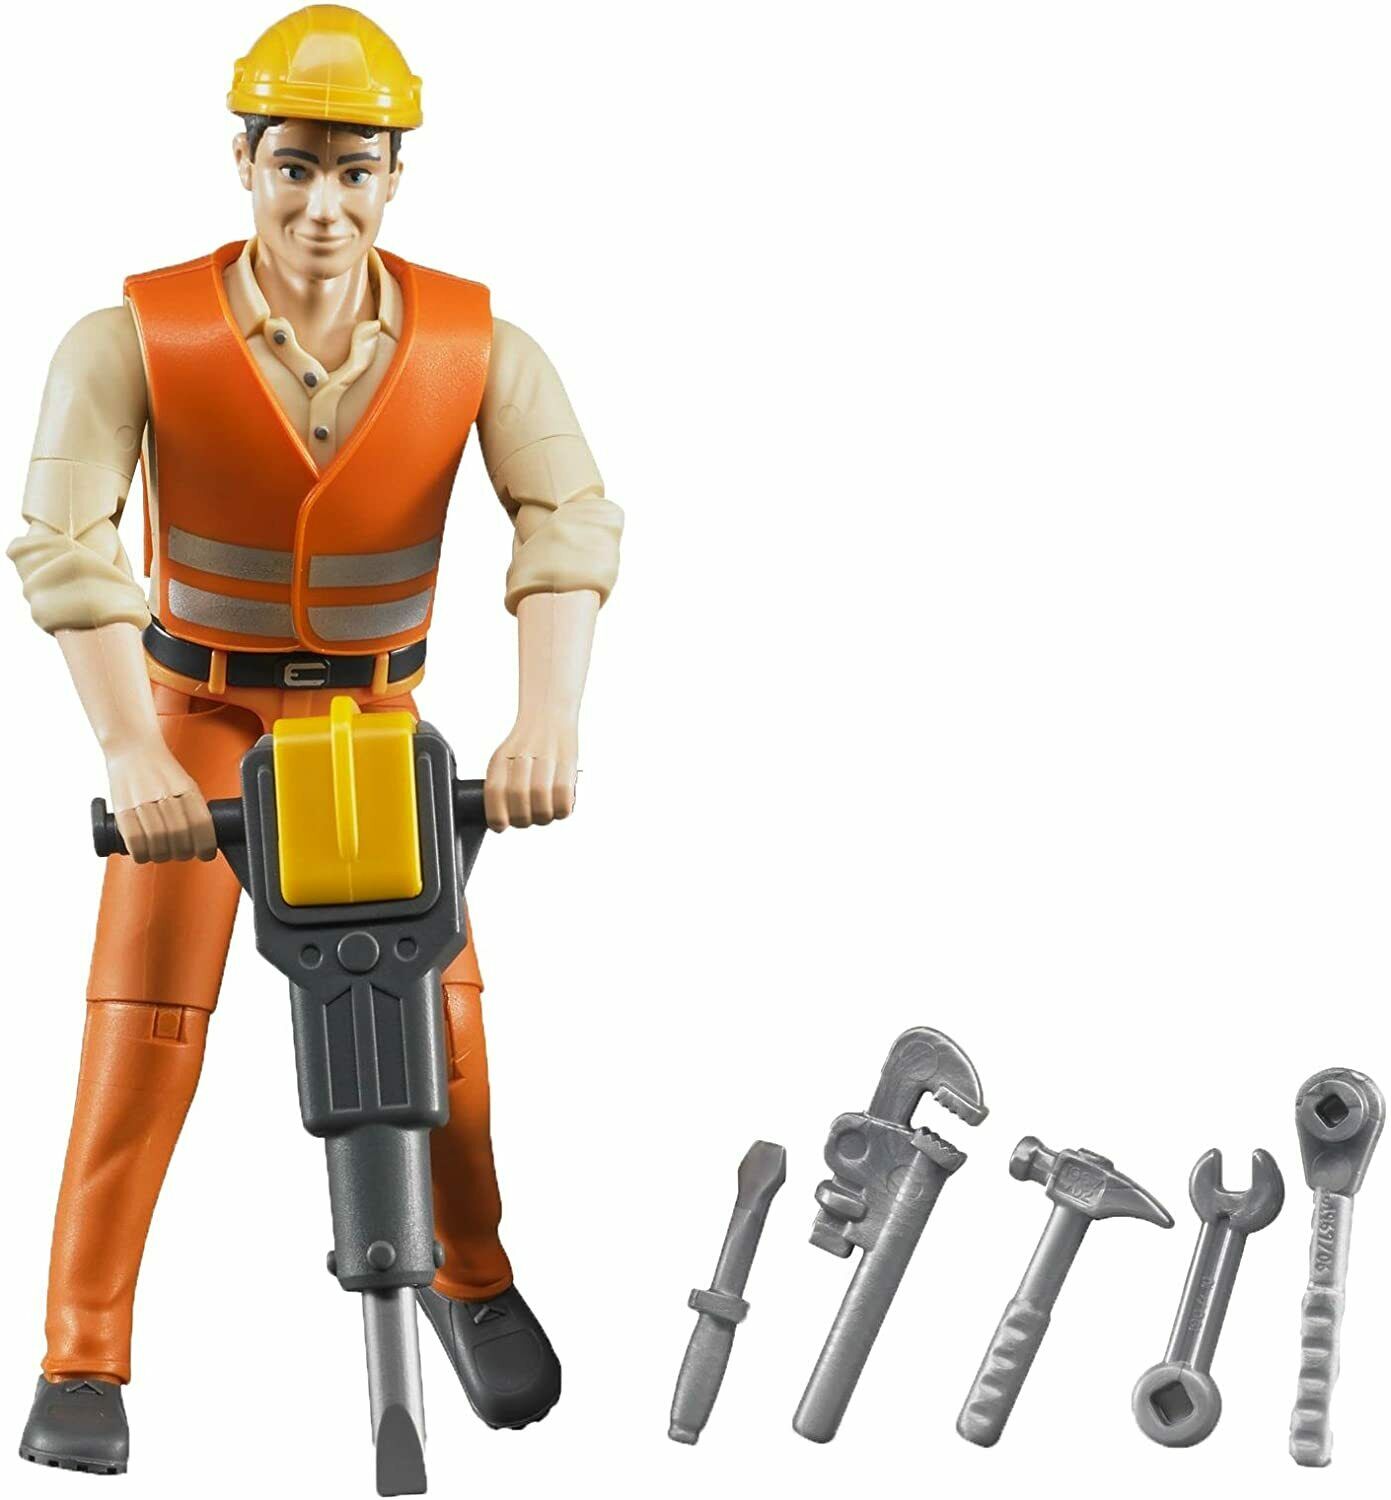 Bruder construction worker w/ Access